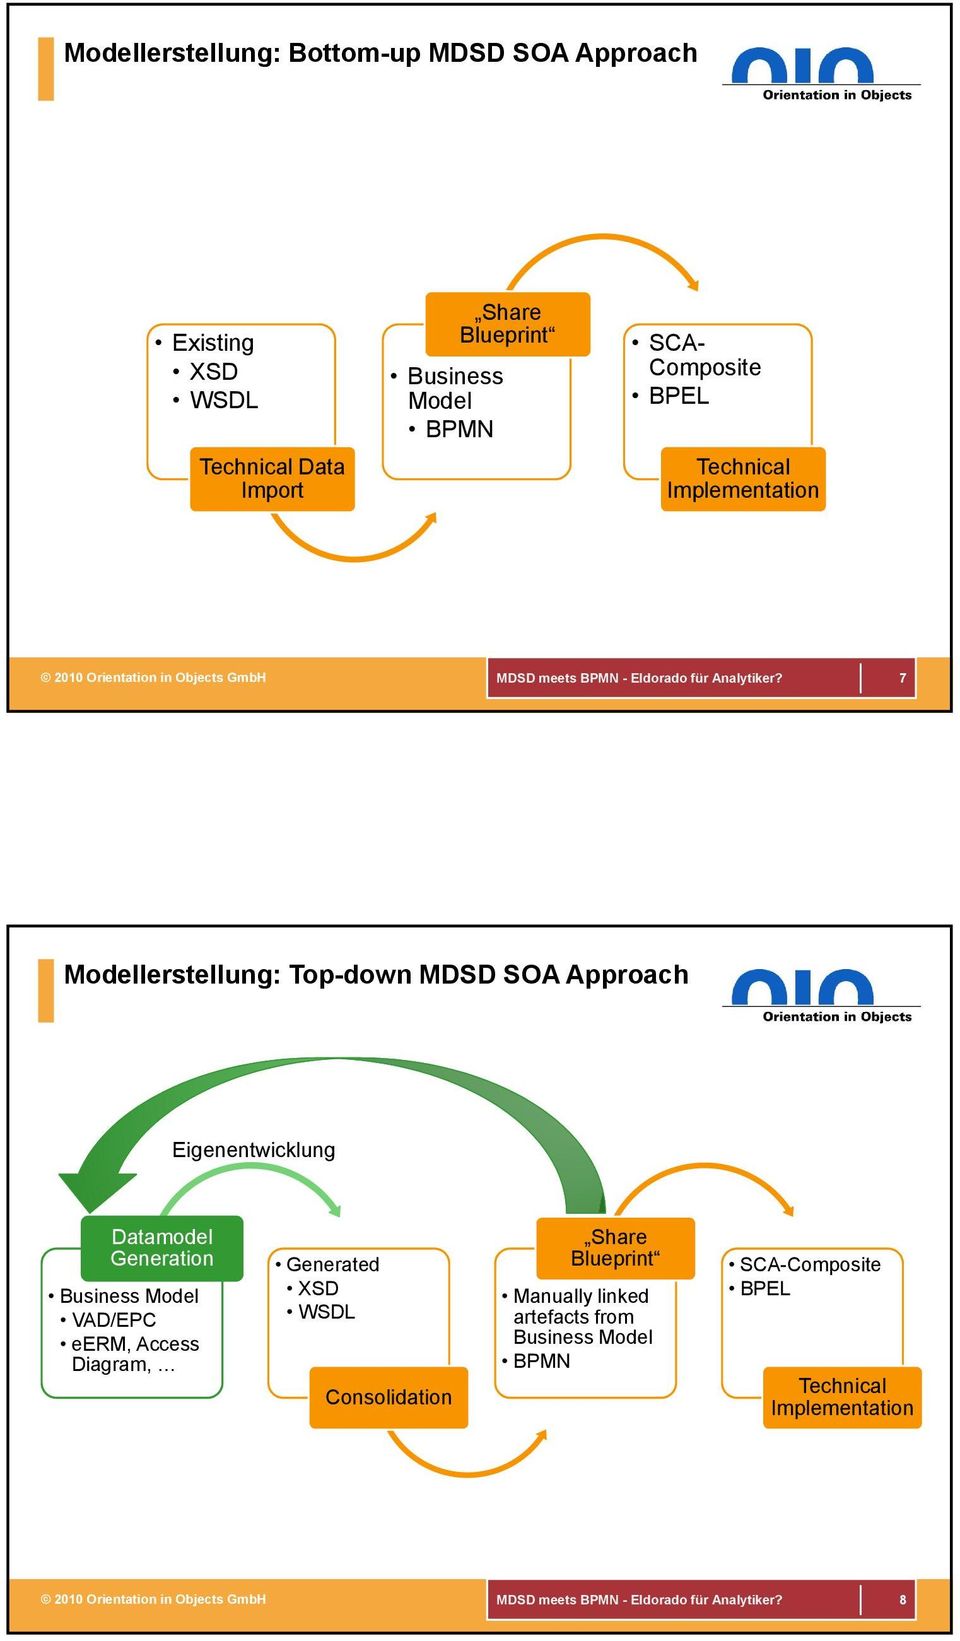 Eigenentwicklung g Datamodel Generation Business Model VAD/EPC eerm, Access Diagram, Generated XSD WSDL